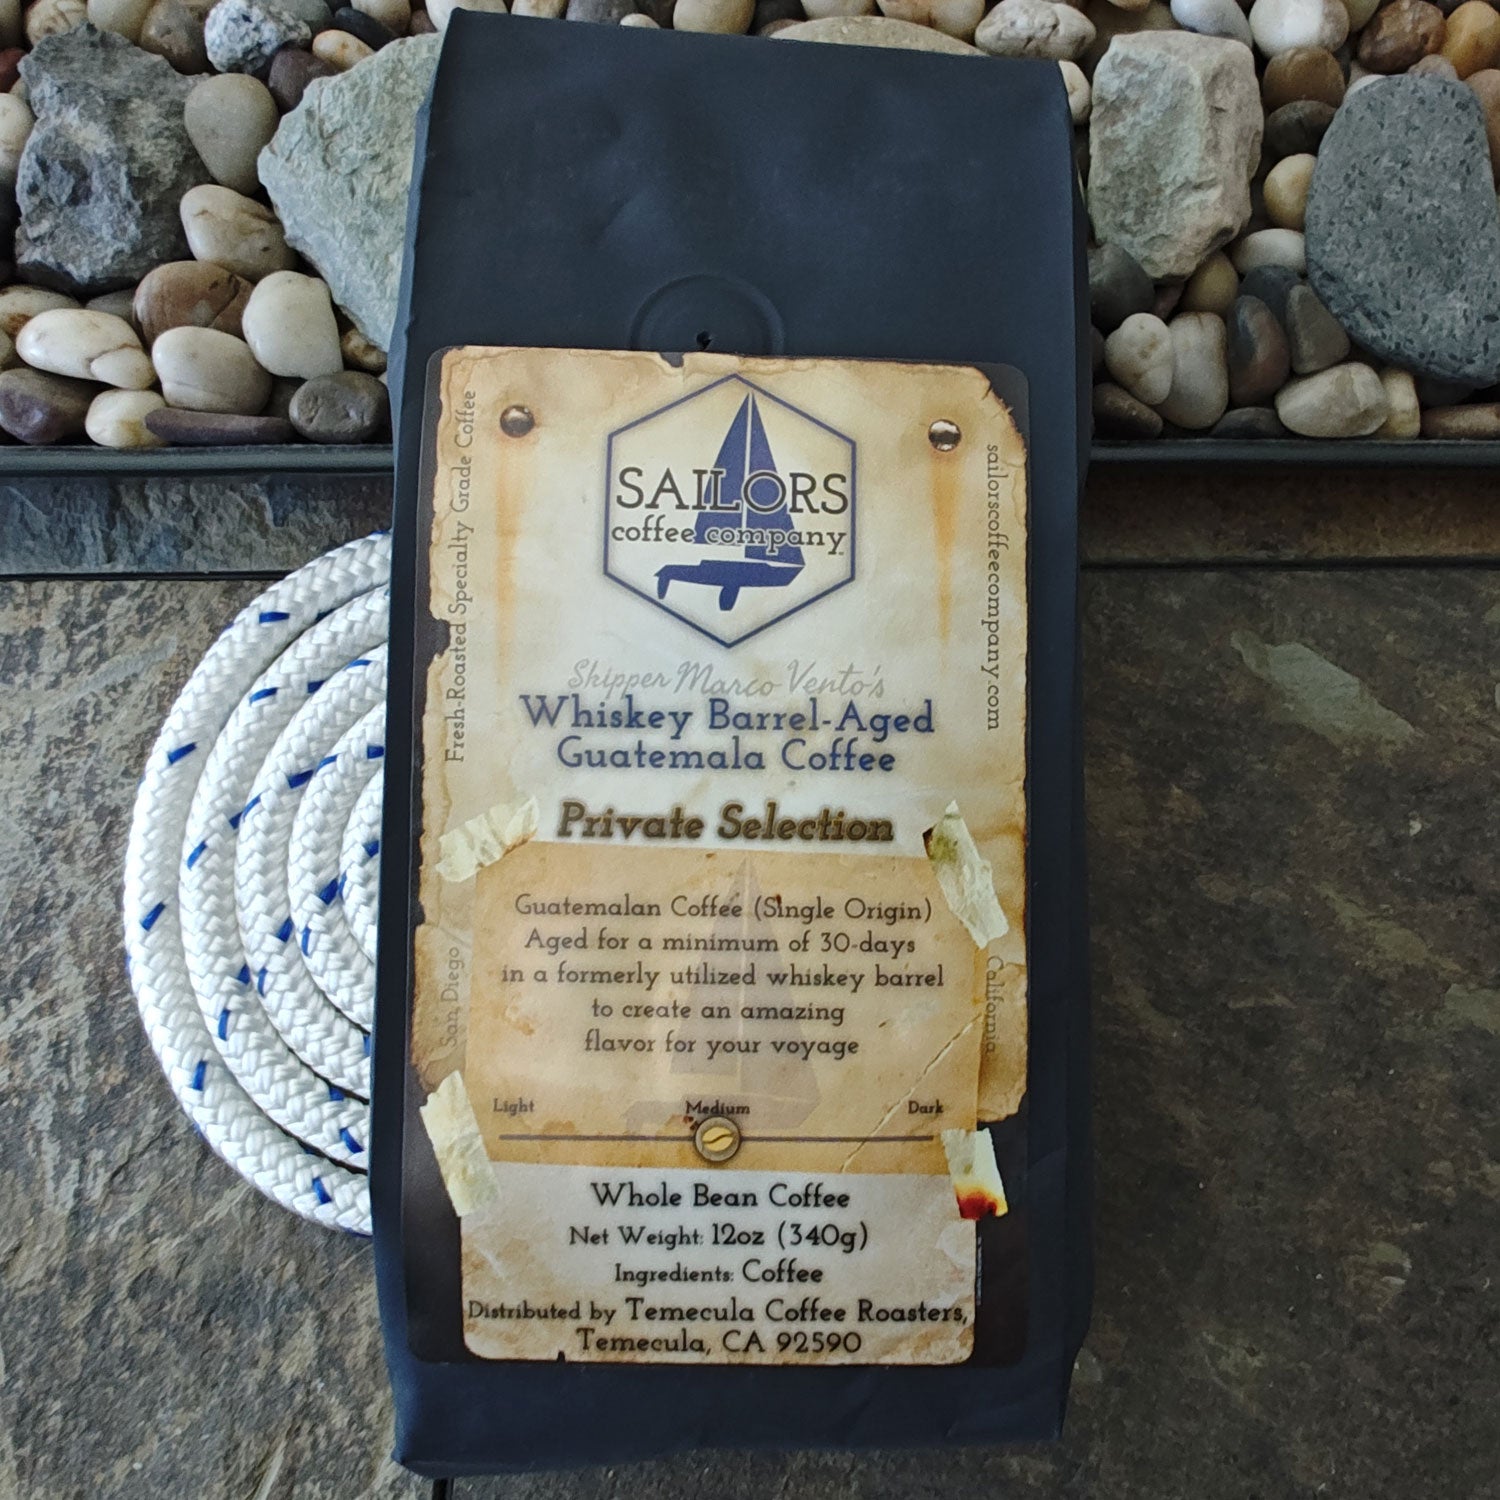 Skipper Marco Vento Whiskey Barrel-Aged Guatemala Coffee